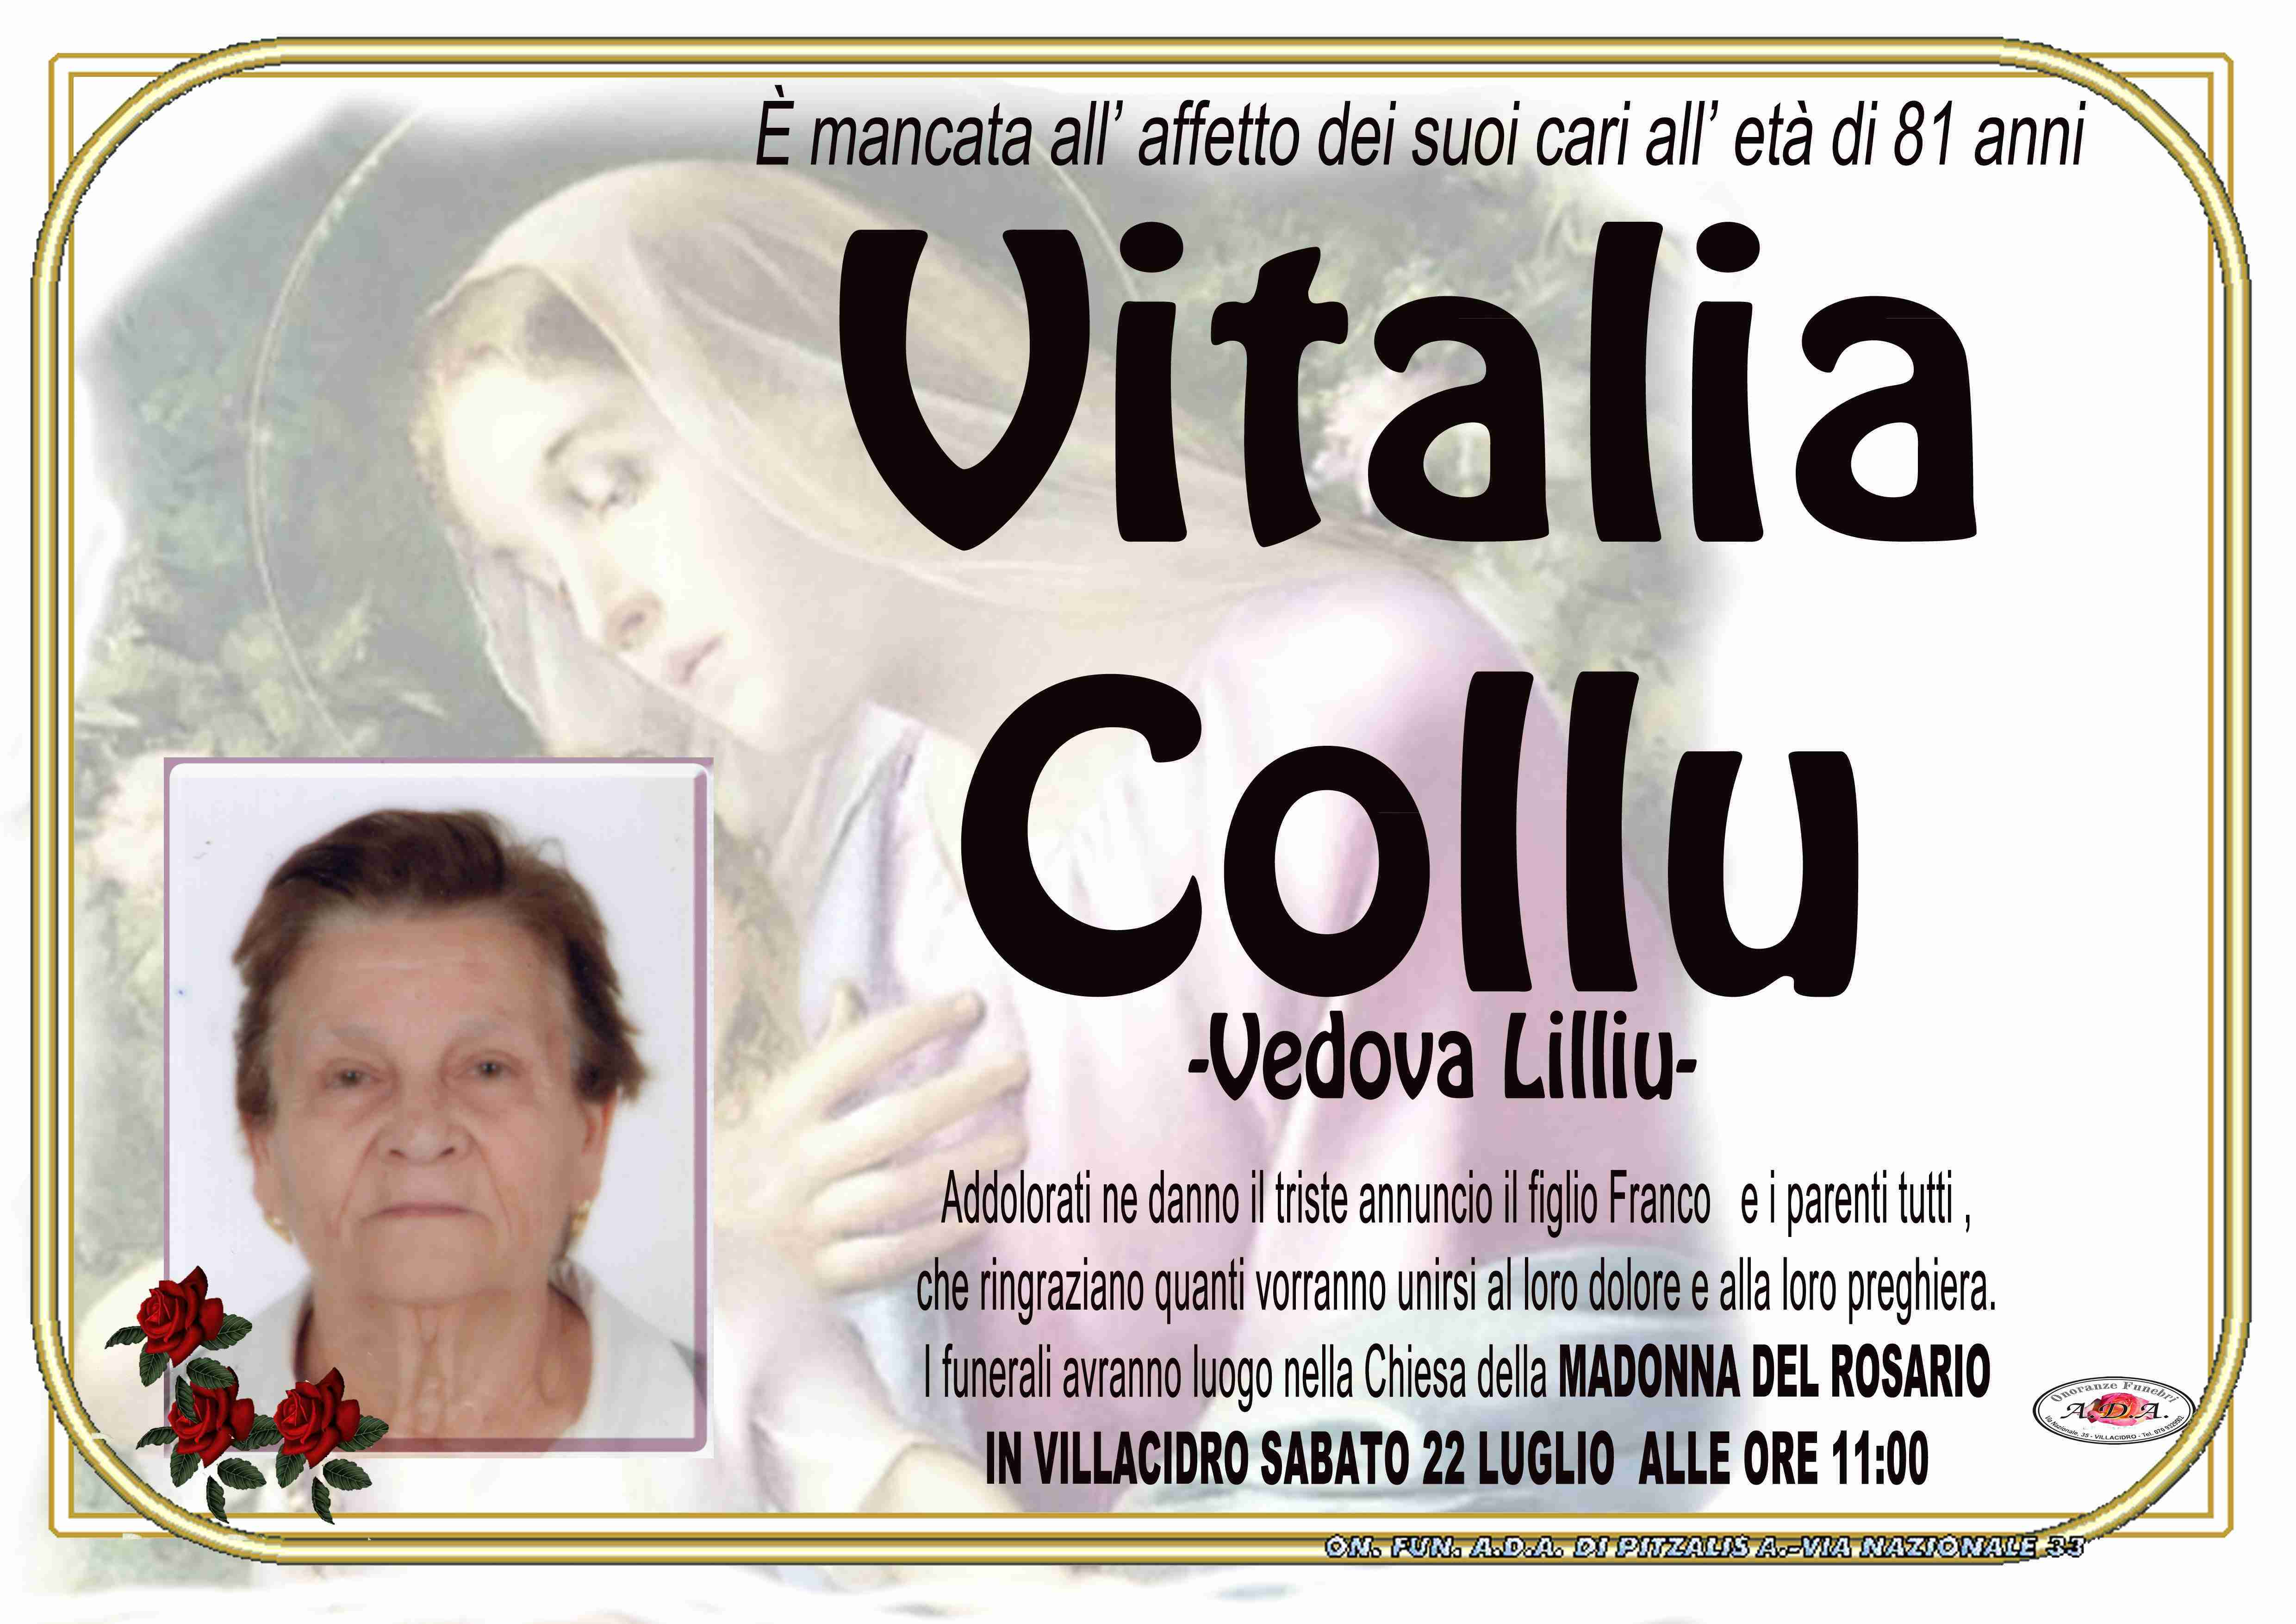 Vitalia Collu